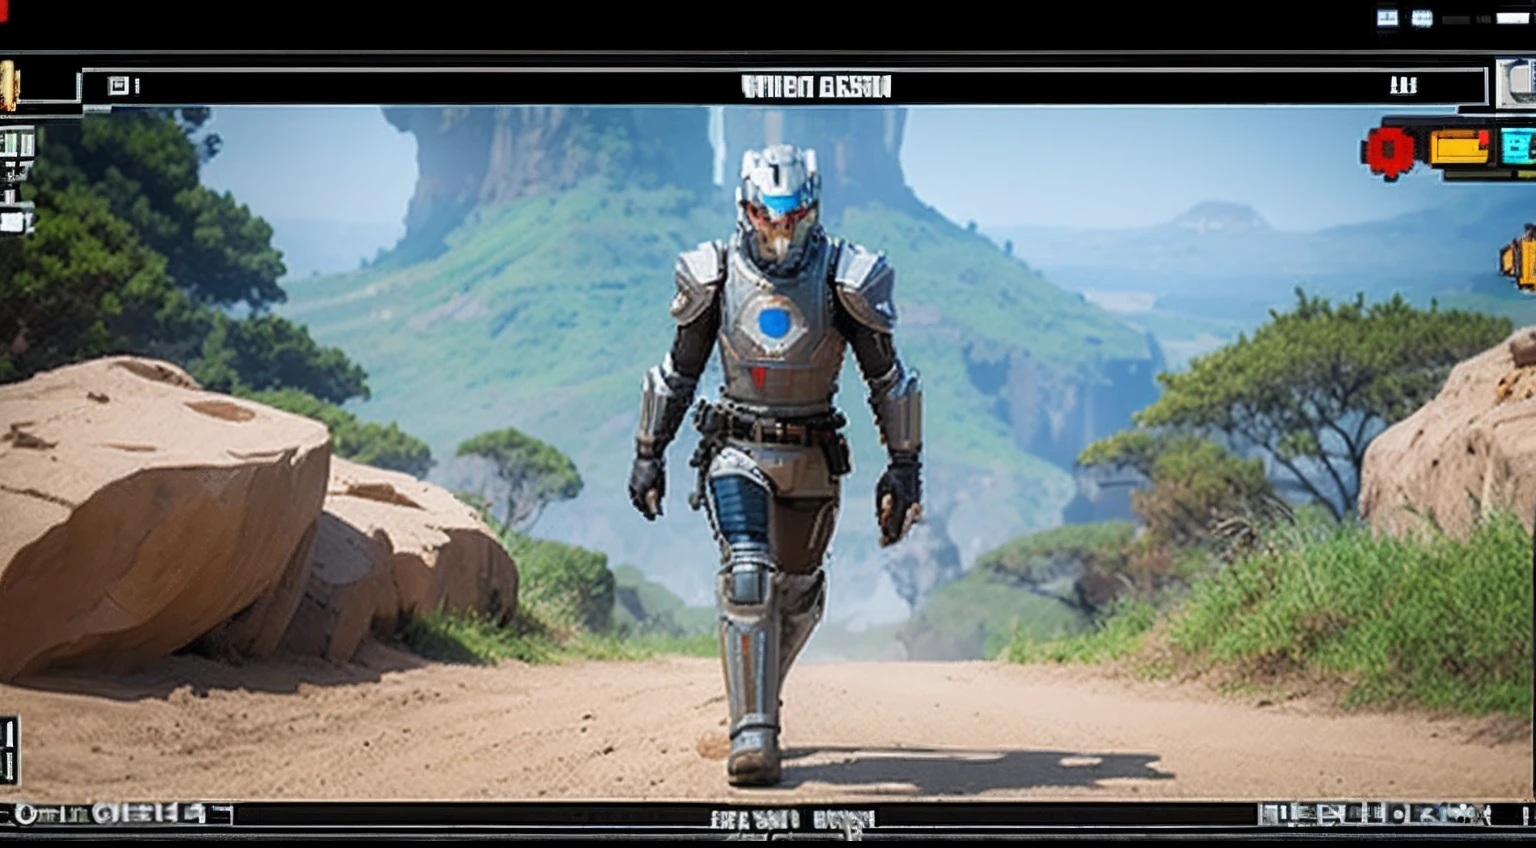 pixel game，character  design，Sci-fi suit，Warrior with a laser gun， Pixel art #pixelart